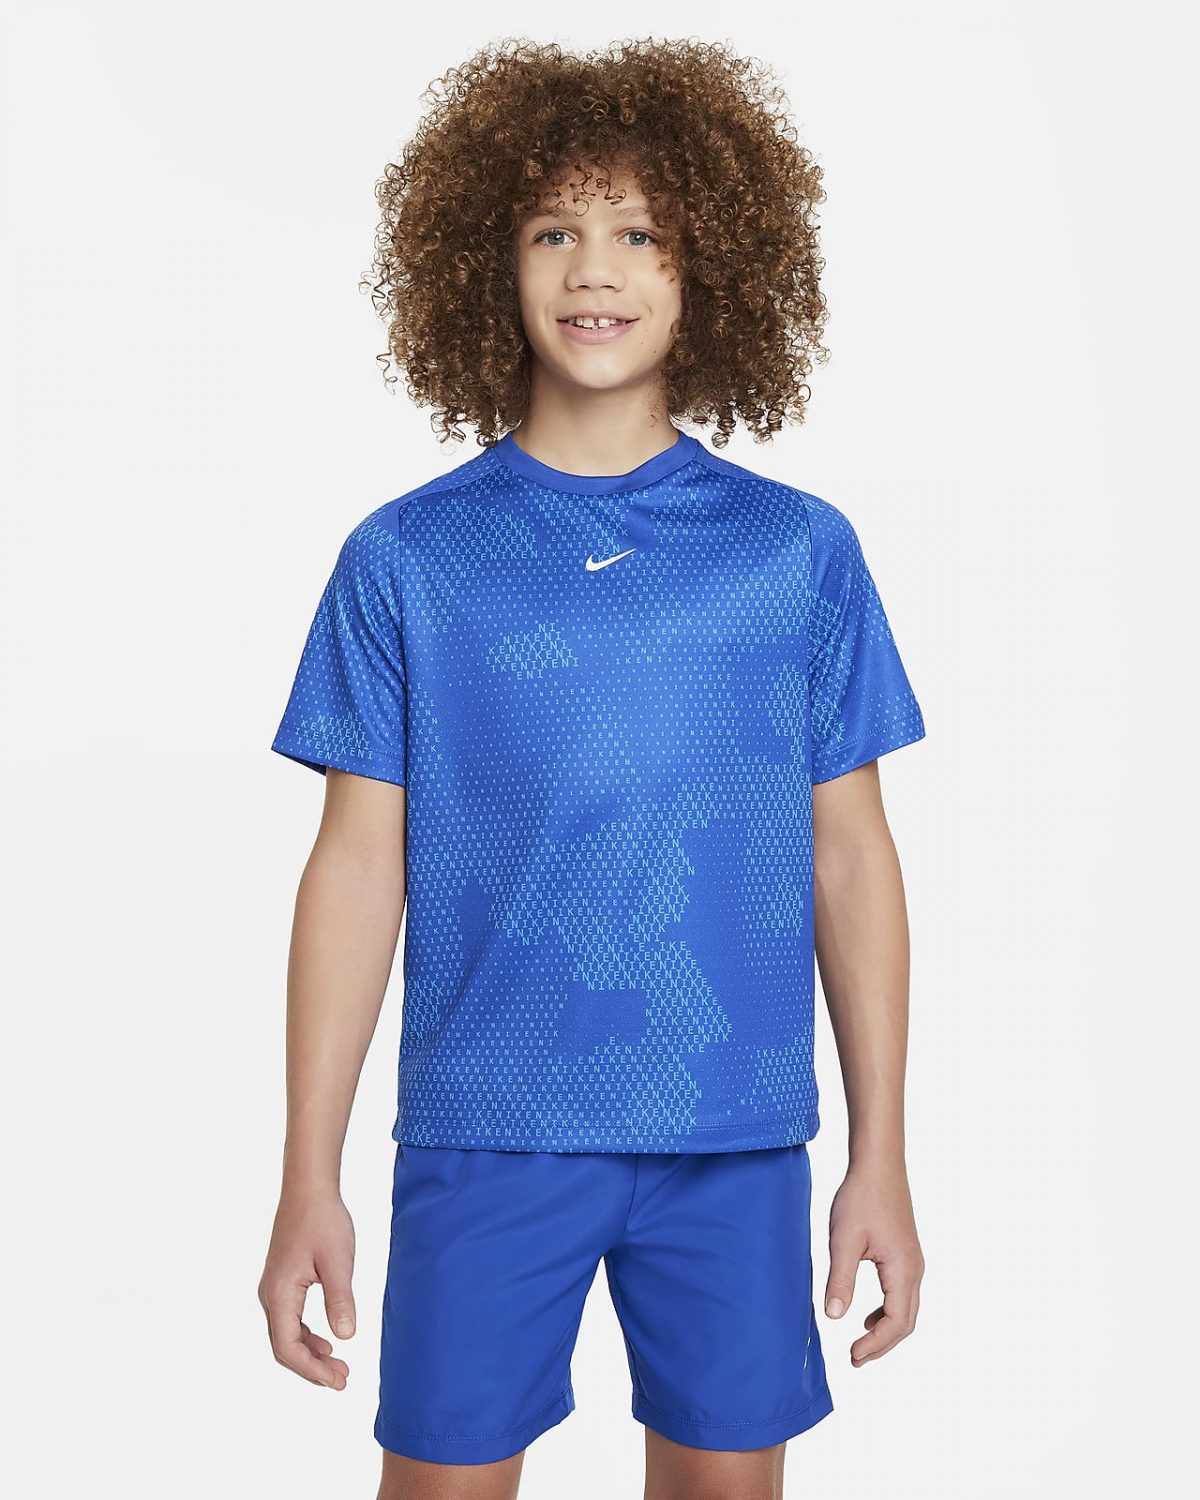 Детская рубашка Nike Multi белая фото